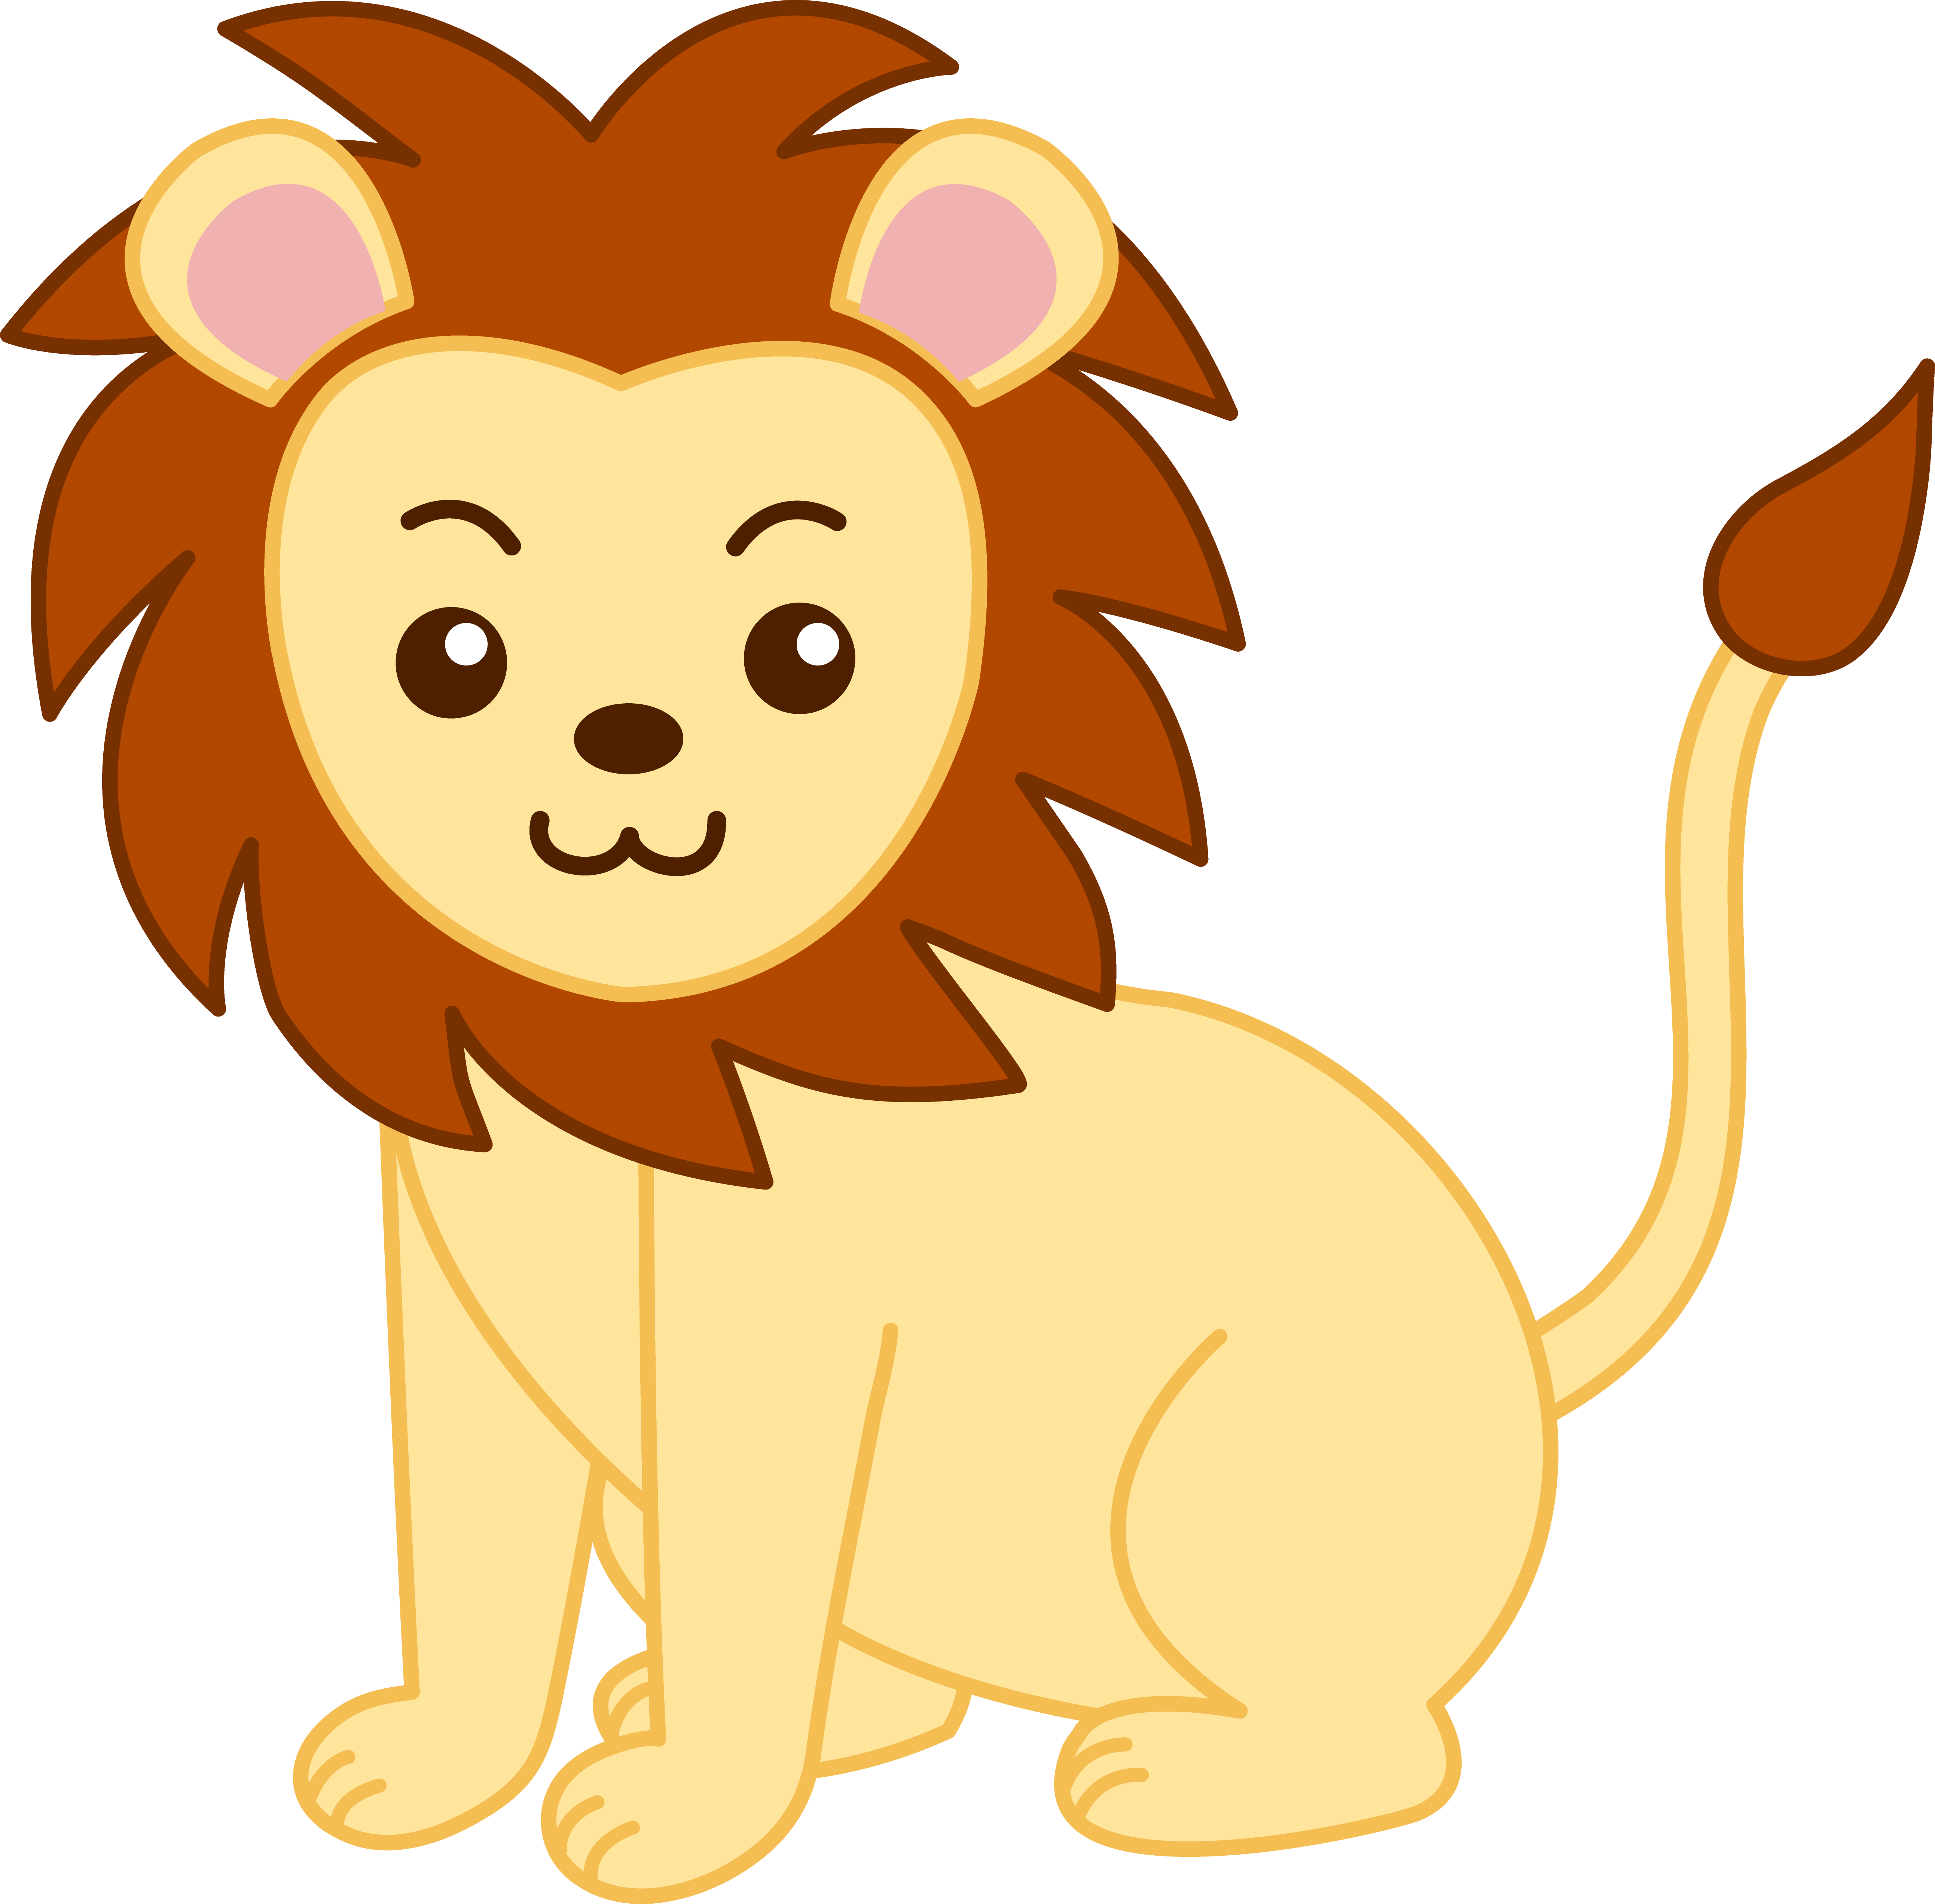 Baby Lion Clip Art - Free Clipart Images